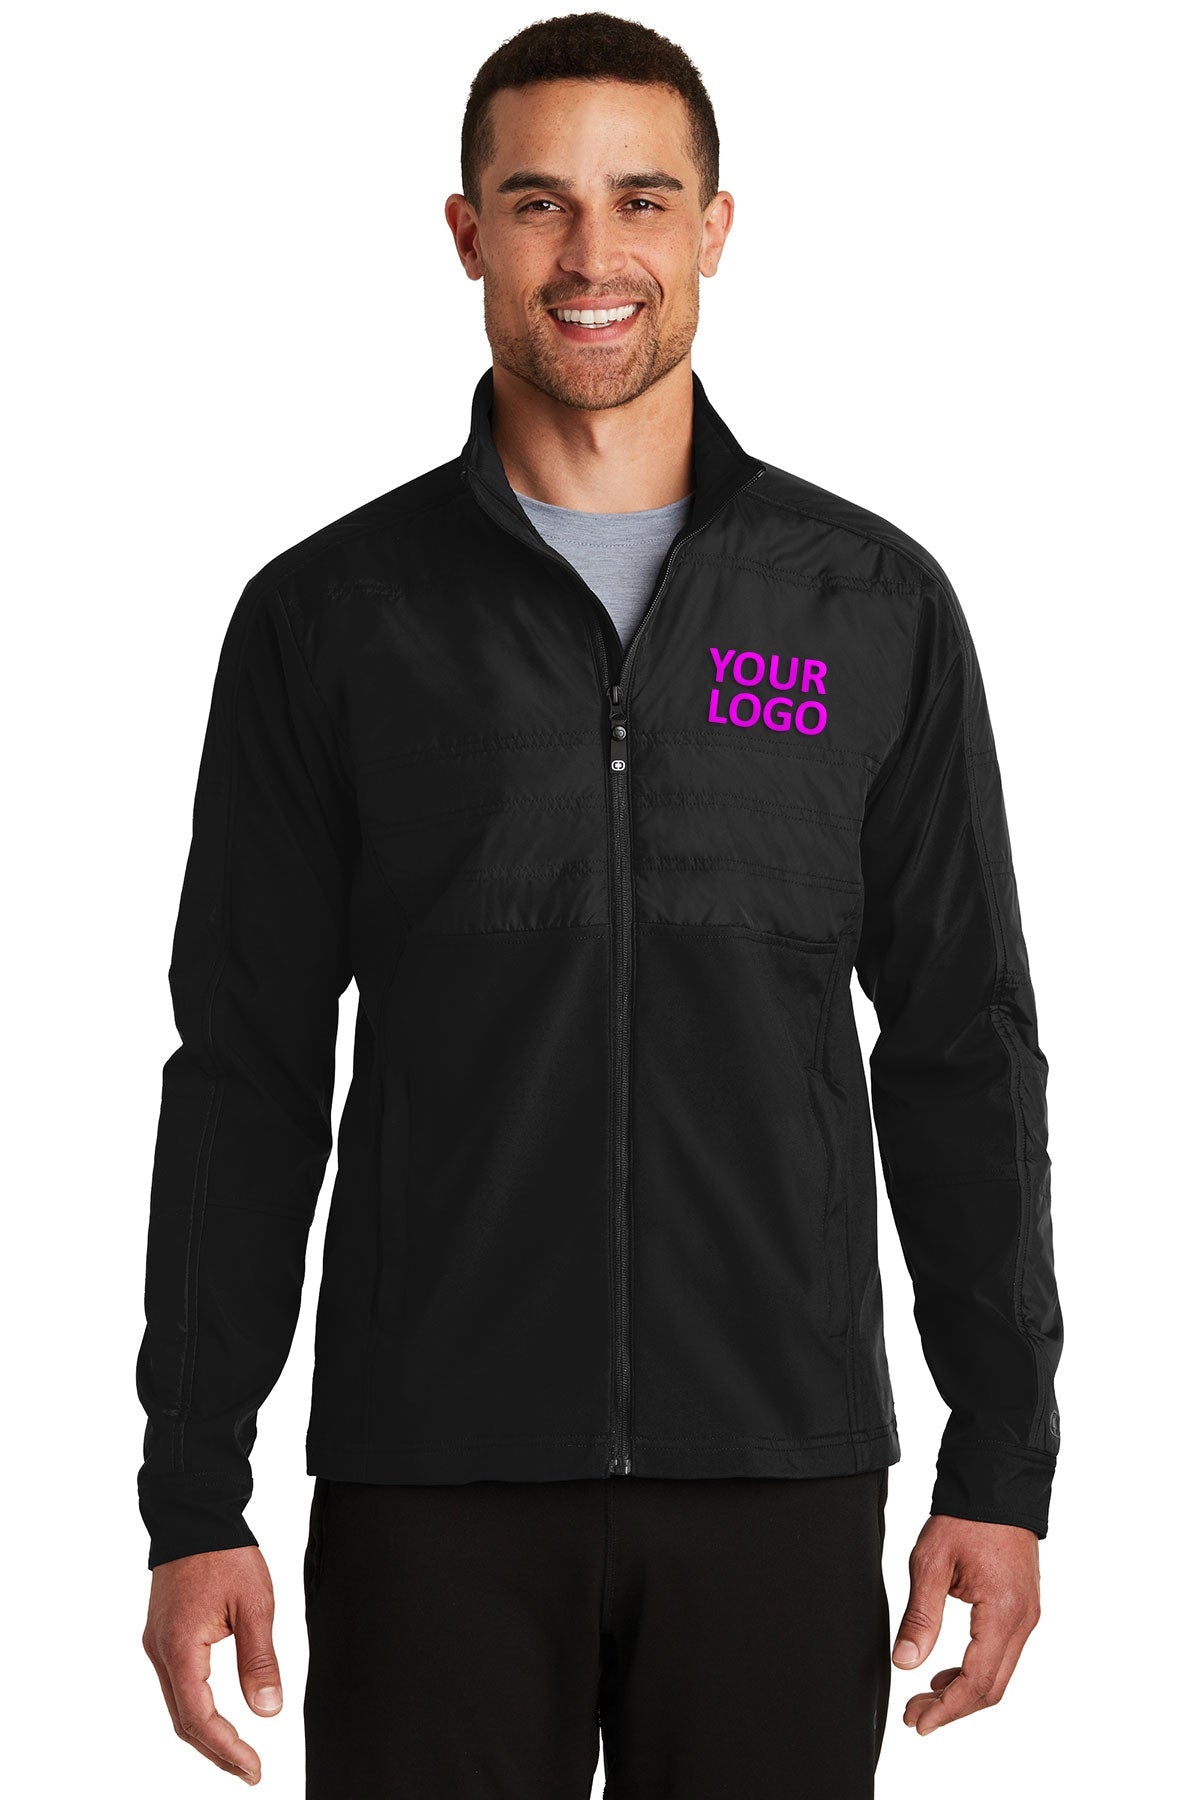 OGIO Endurance Blacktop OE722 company jackets with logo